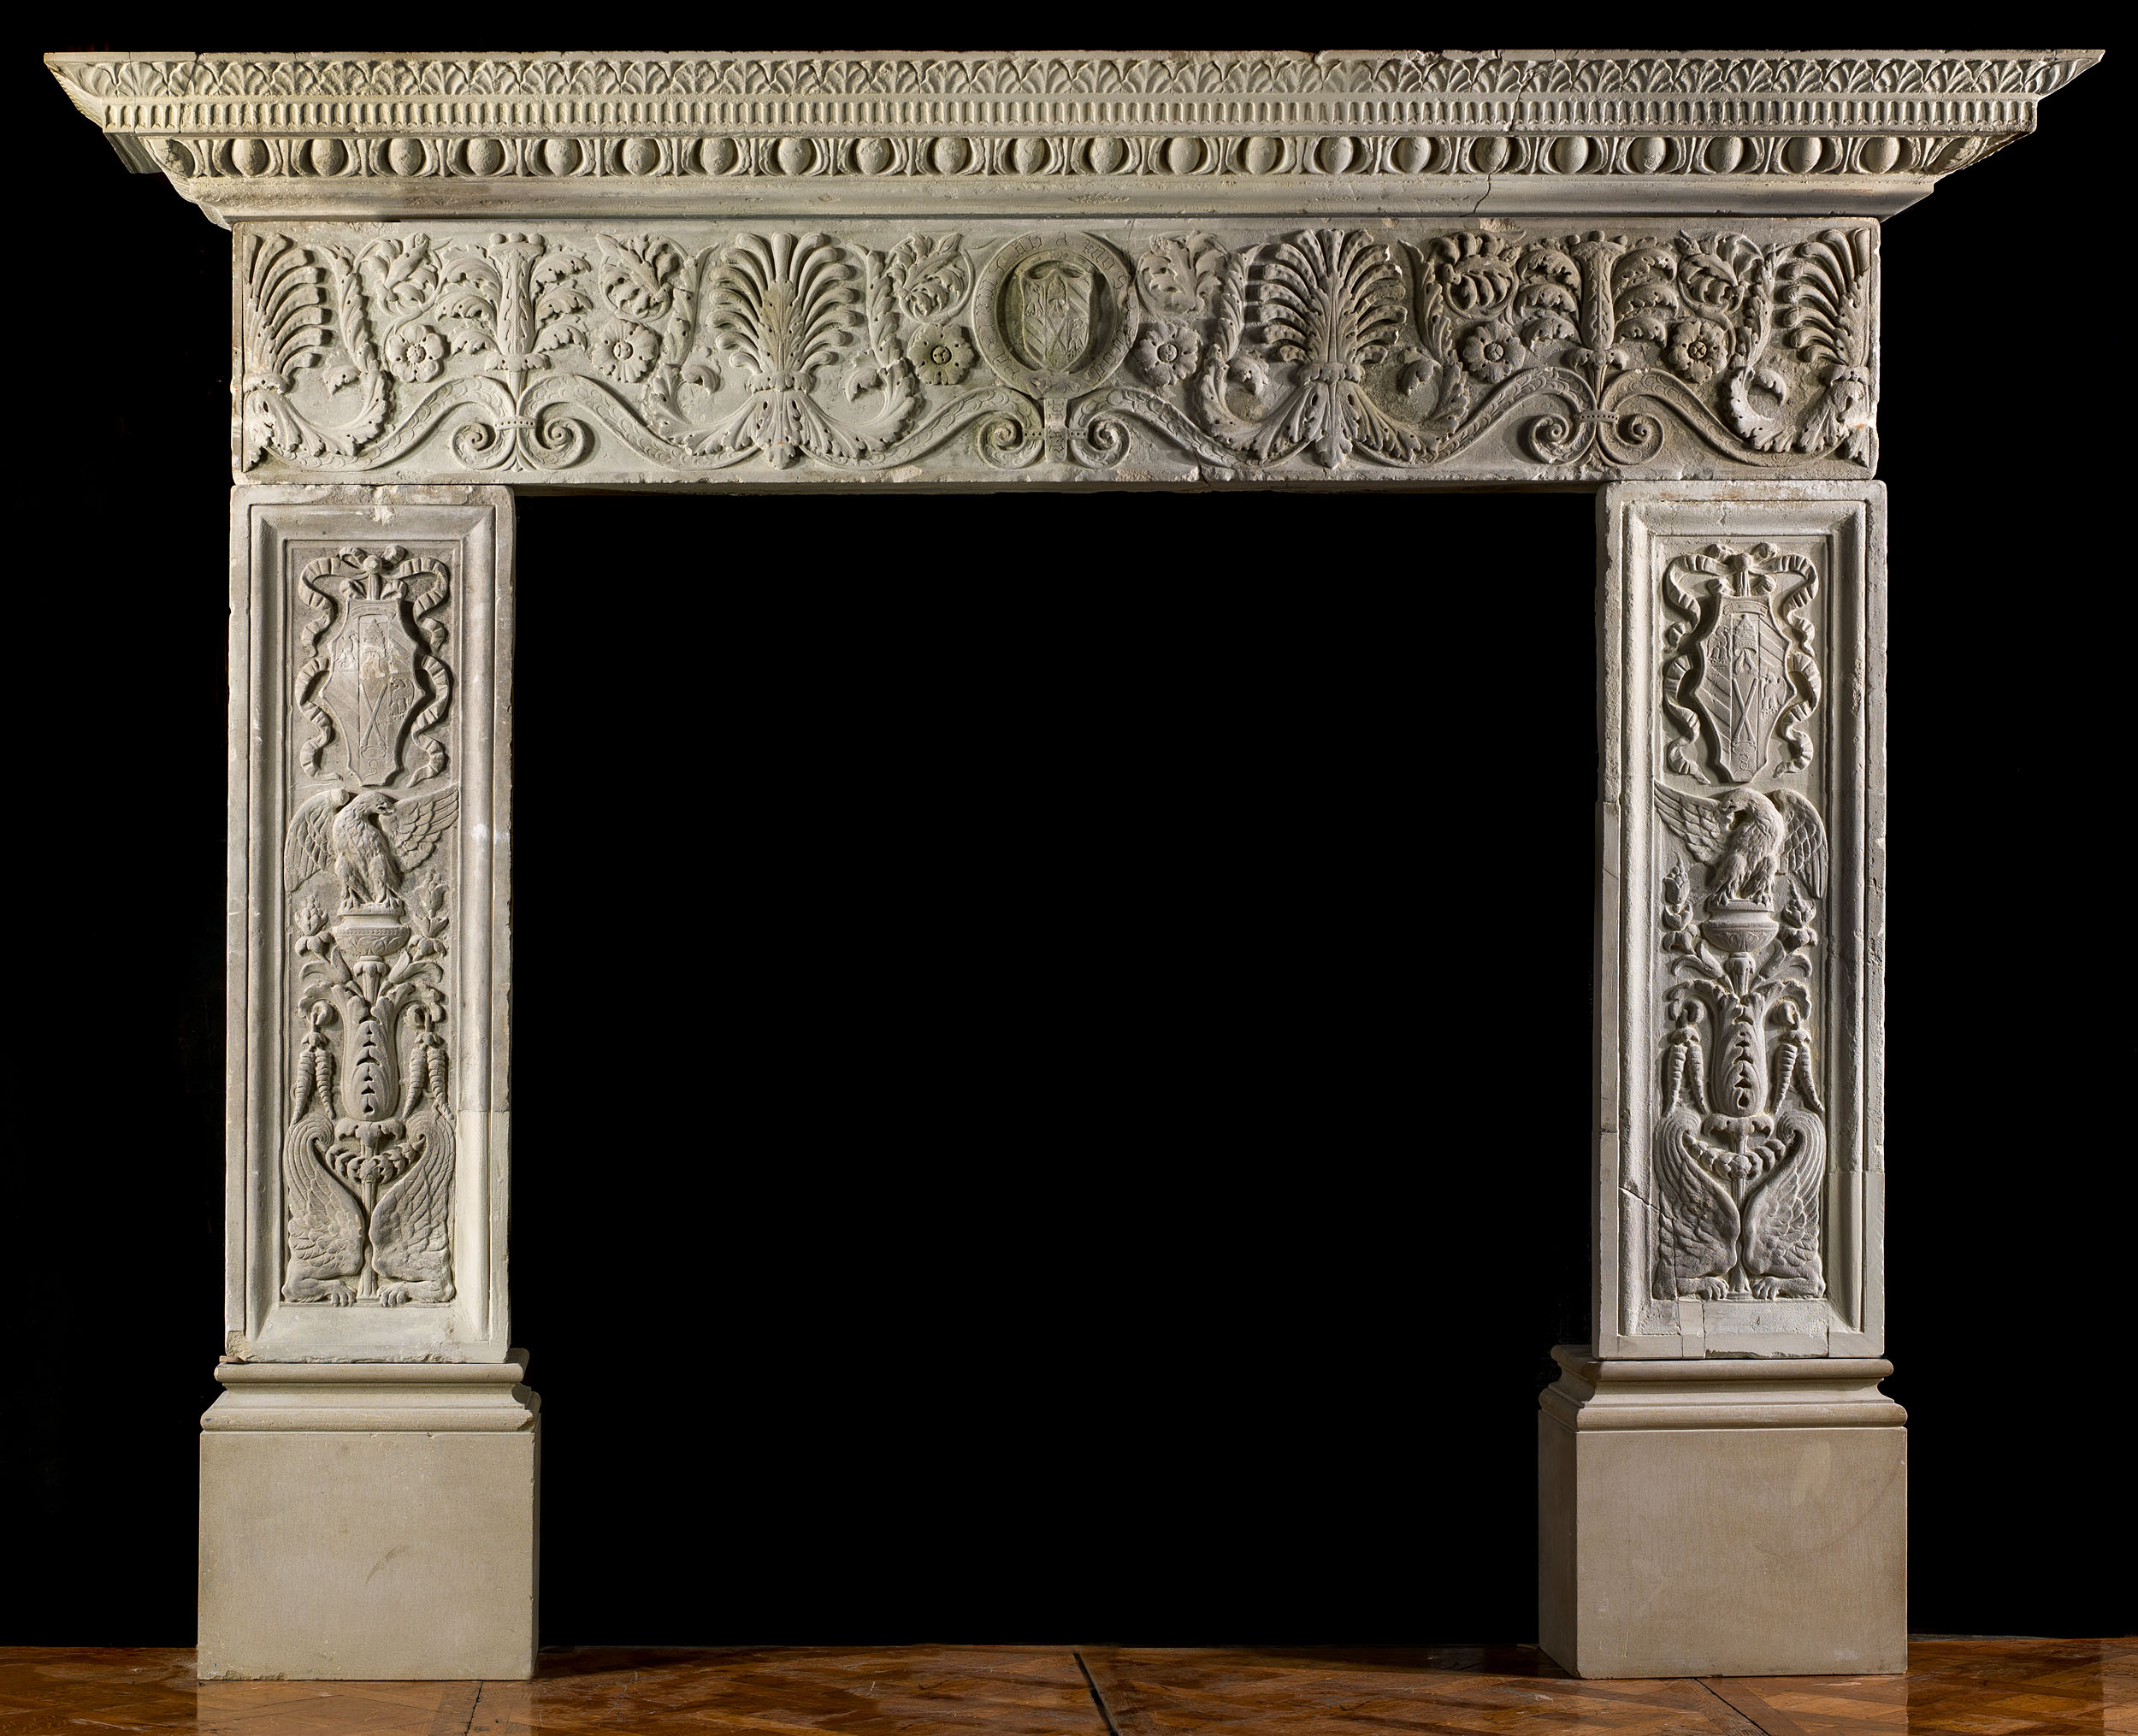 An Italian Renaissance style stone fireplace mantgel